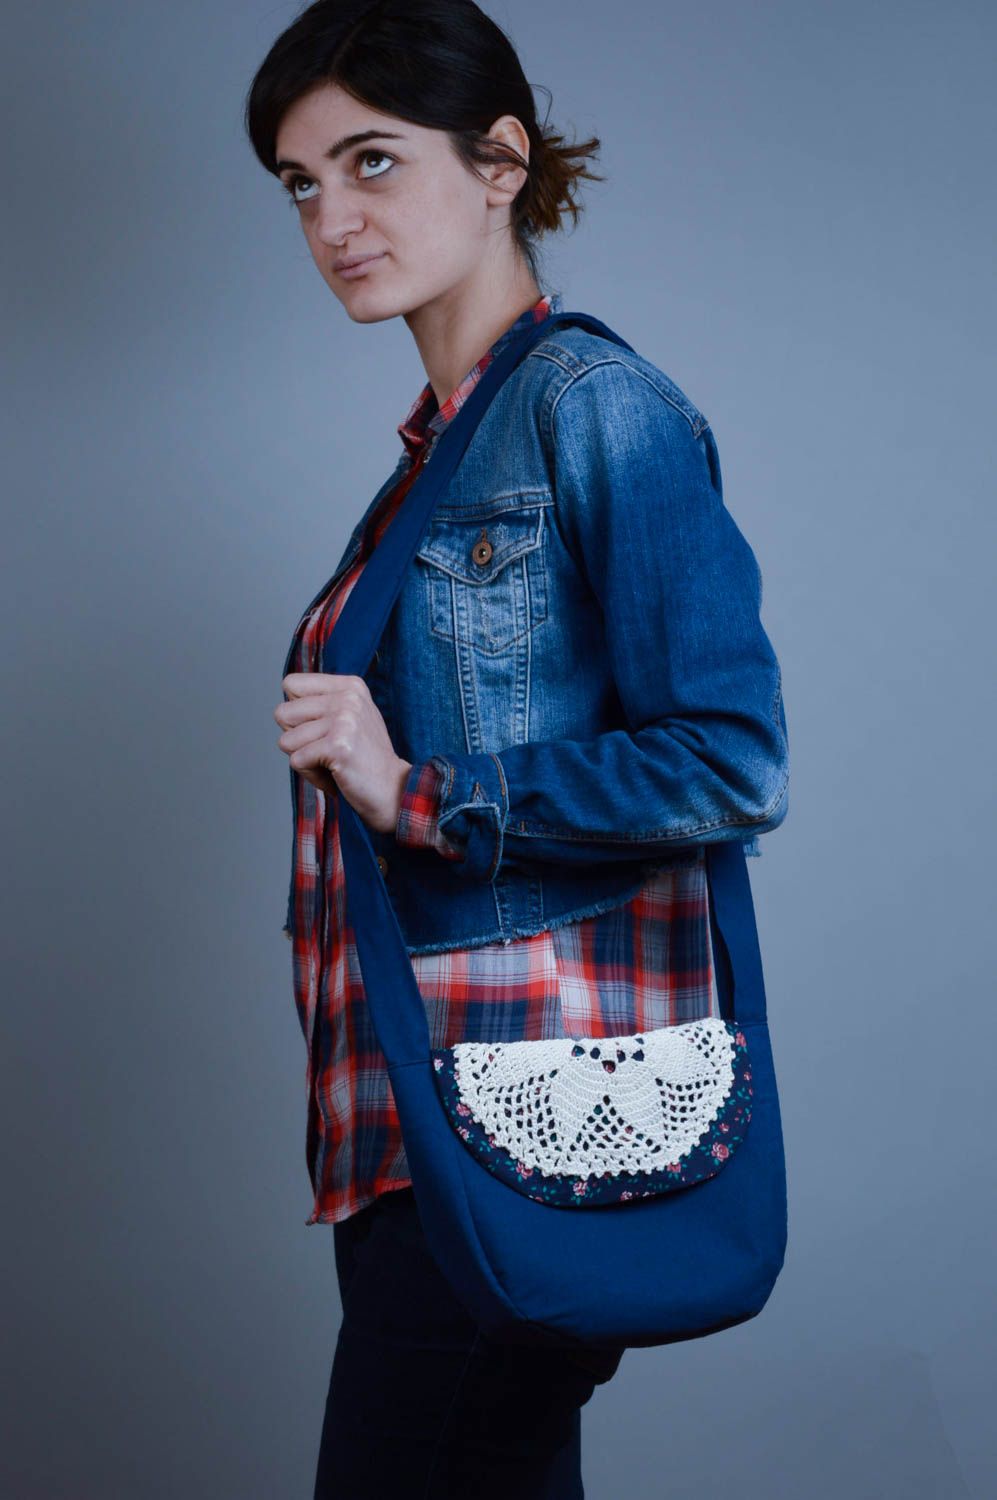 Stylish handmade fabric bag shoulder bag fashion accessories fashion tips photo 2